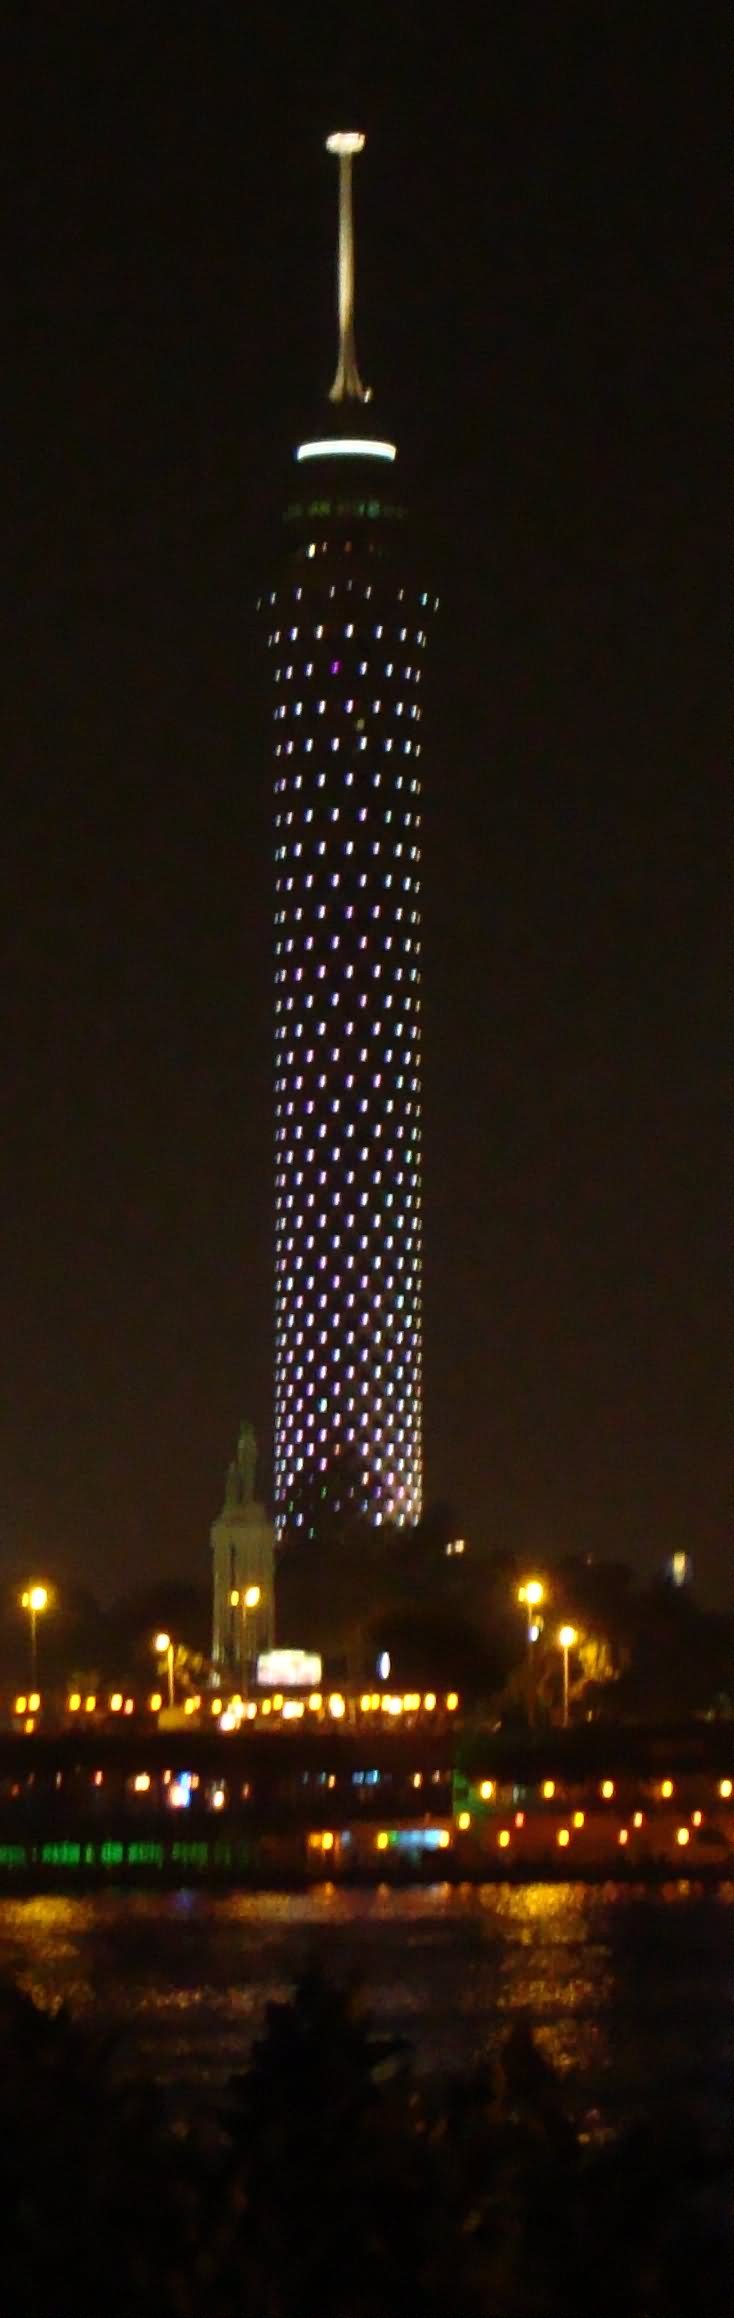 Cairo Tower Night Image